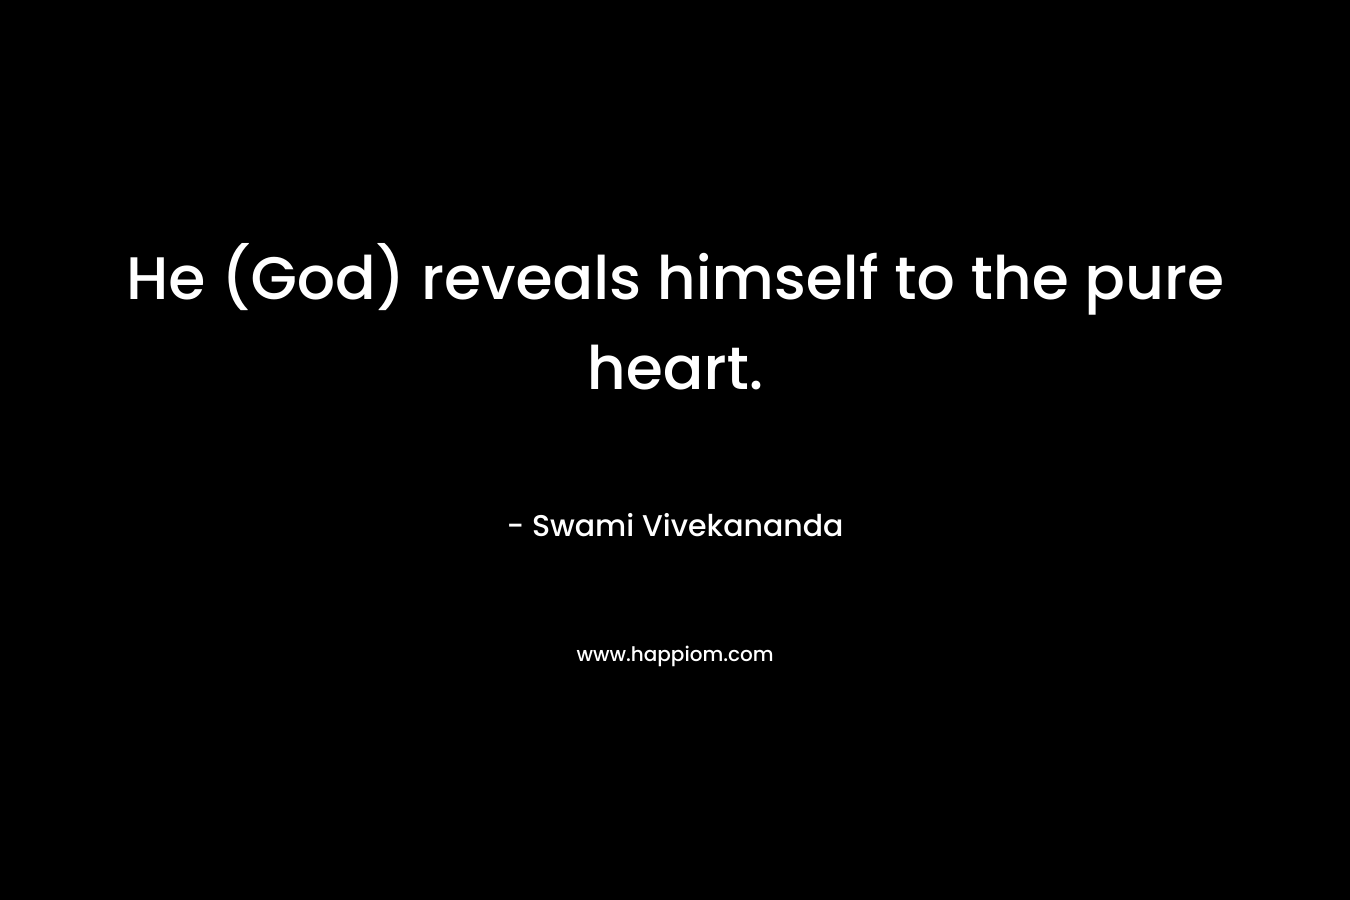 He (God) reveals himself to the pure heart.